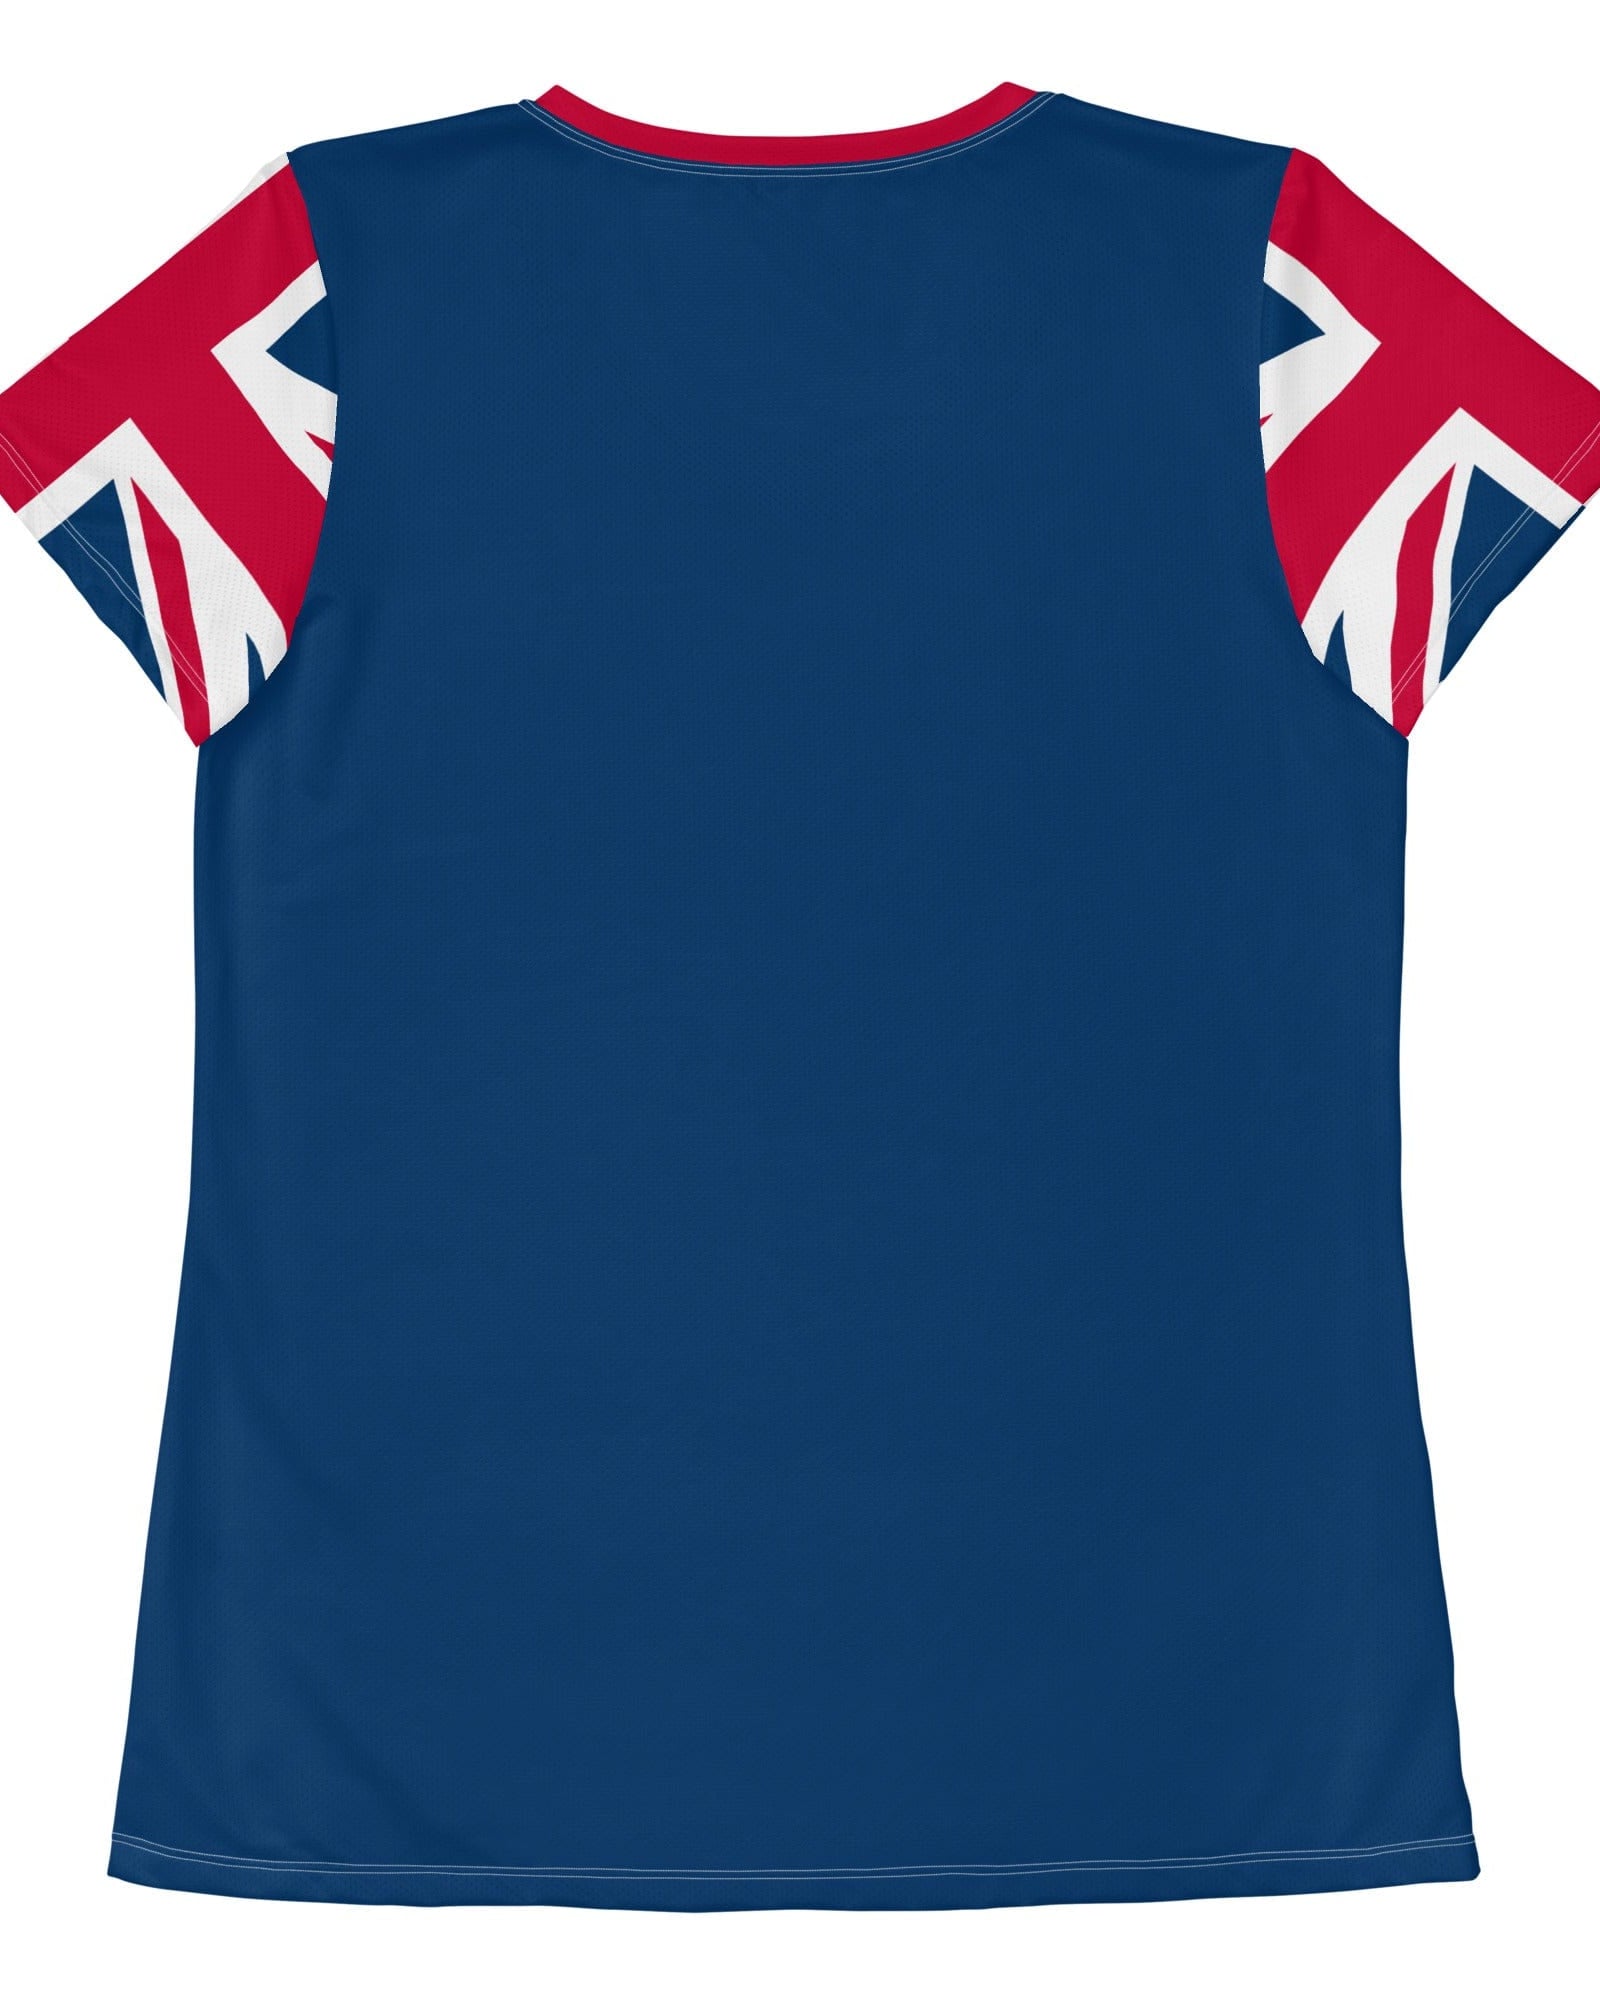 Union Jack Women's Workout Shirt women's athletic shirts Jolly & Goode